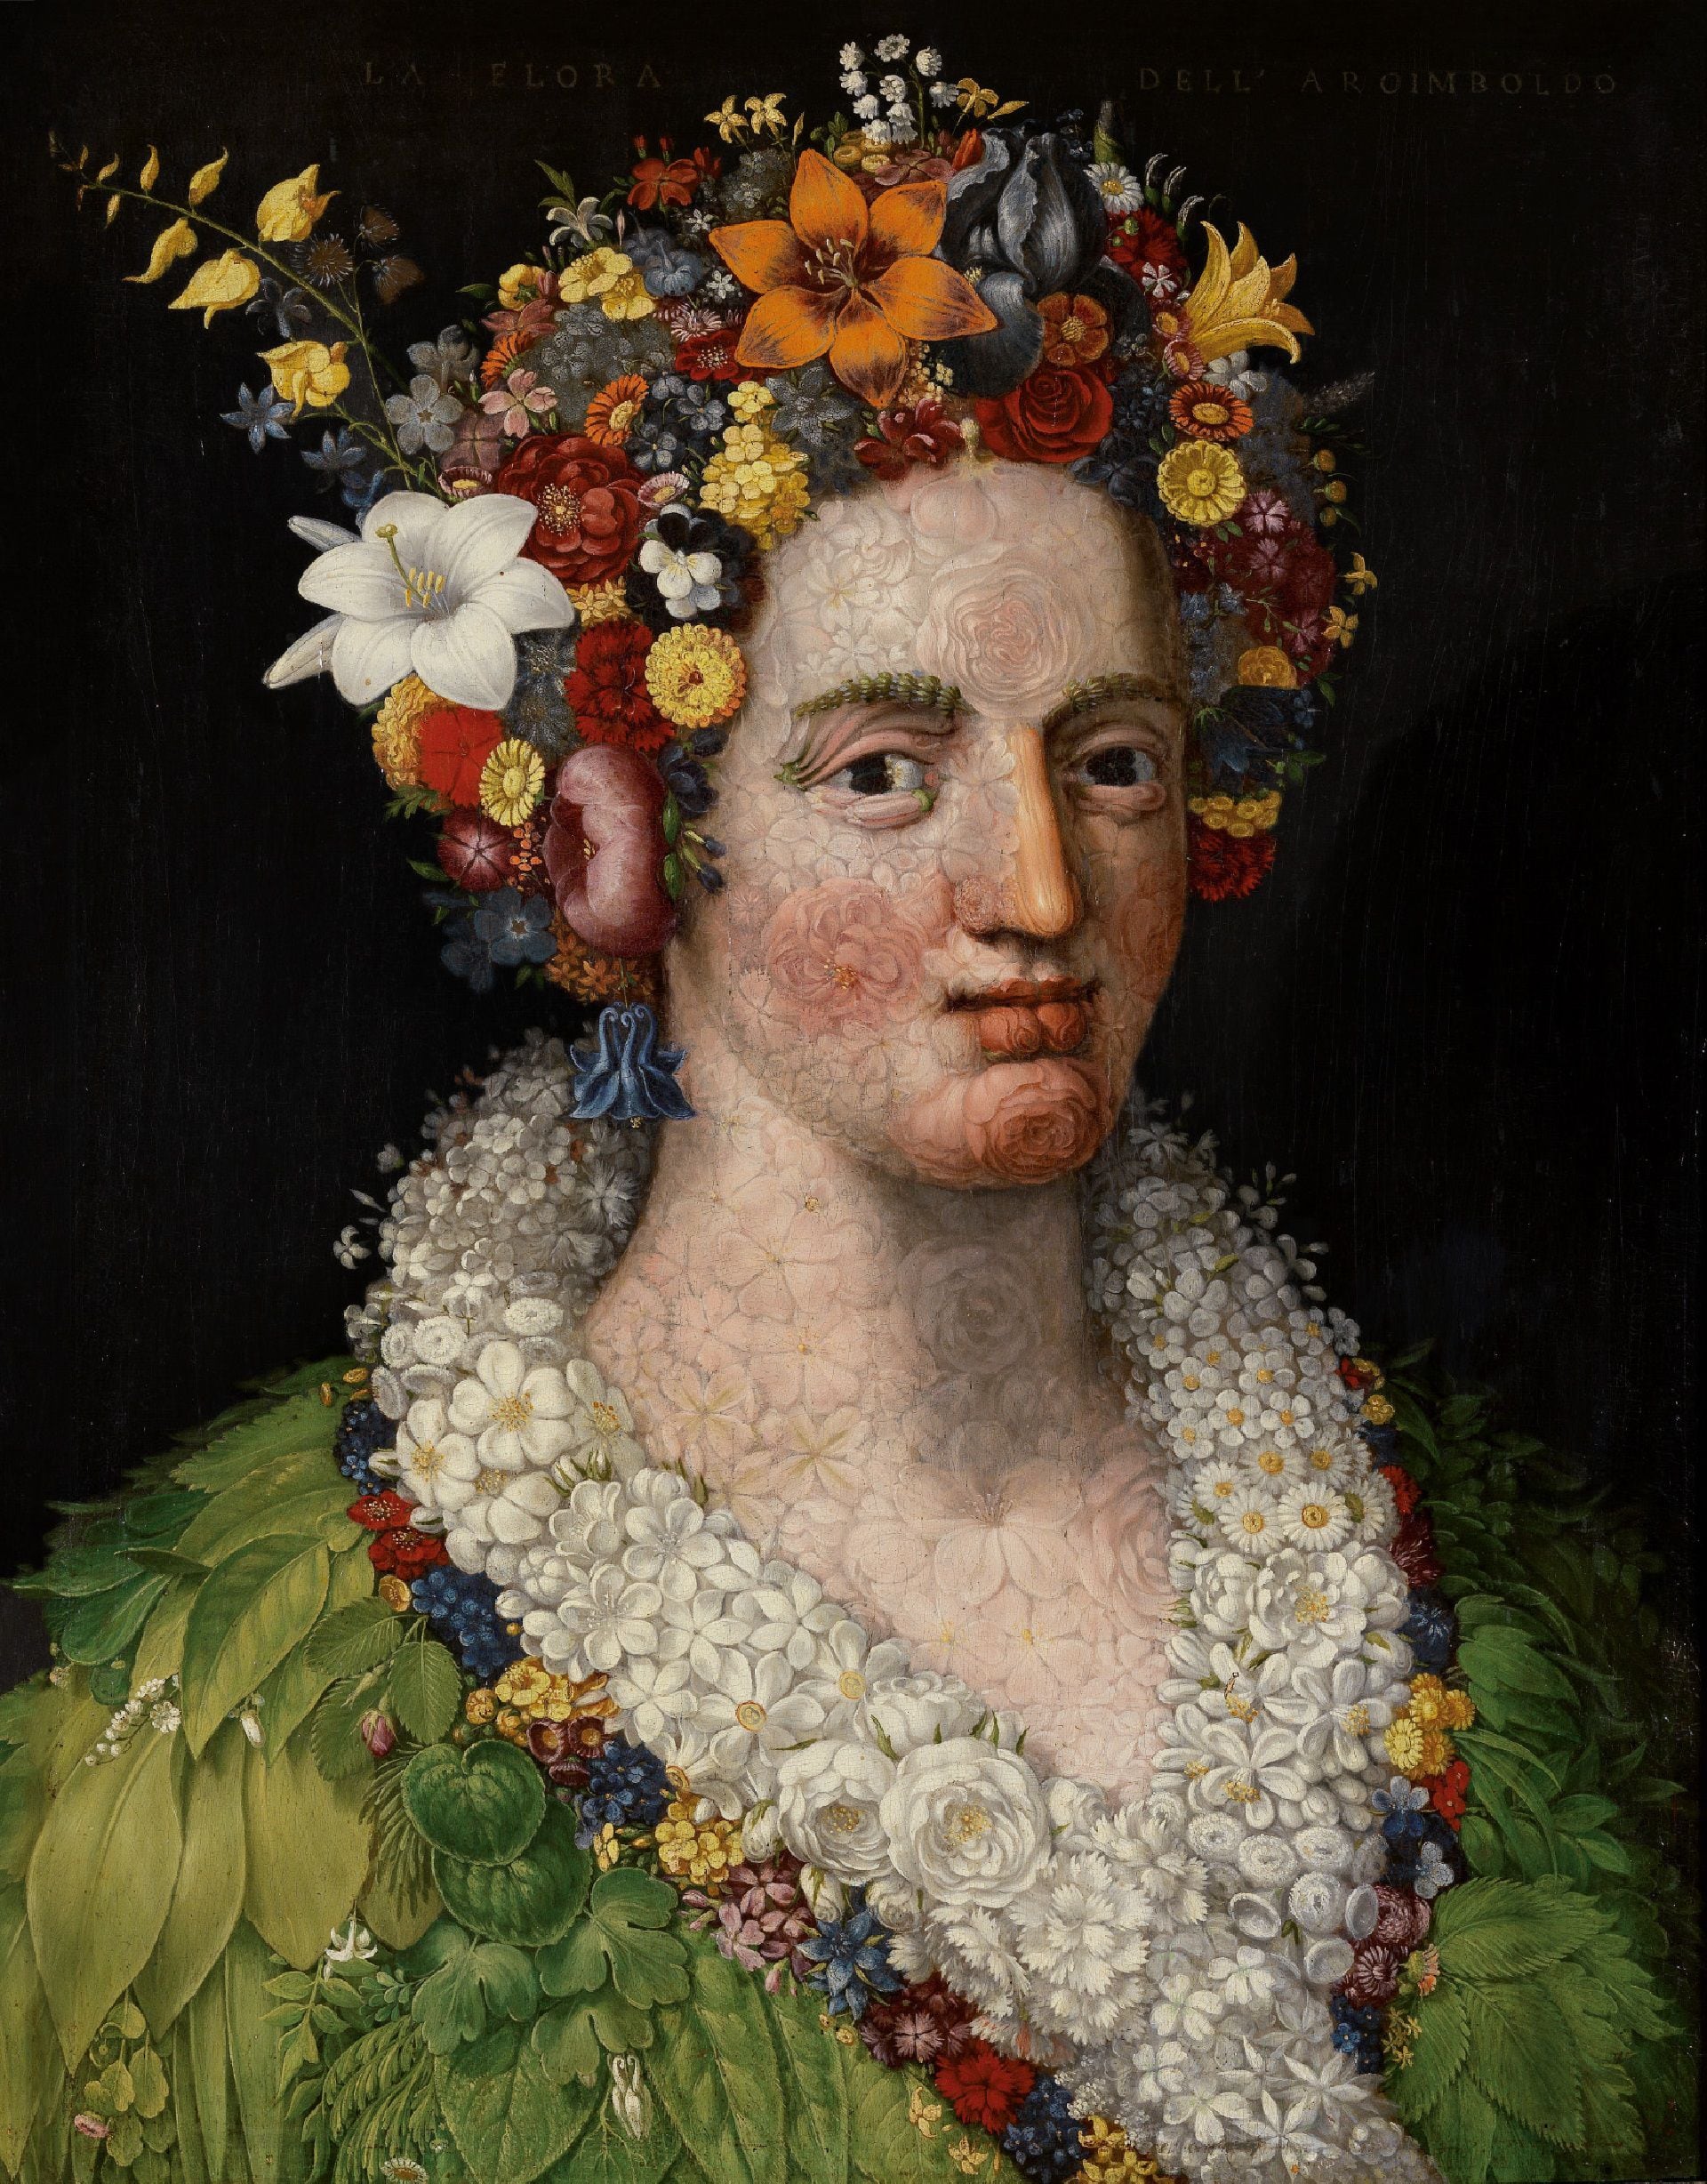 “Flora” (1589), de Giuseppe Arcimboldo